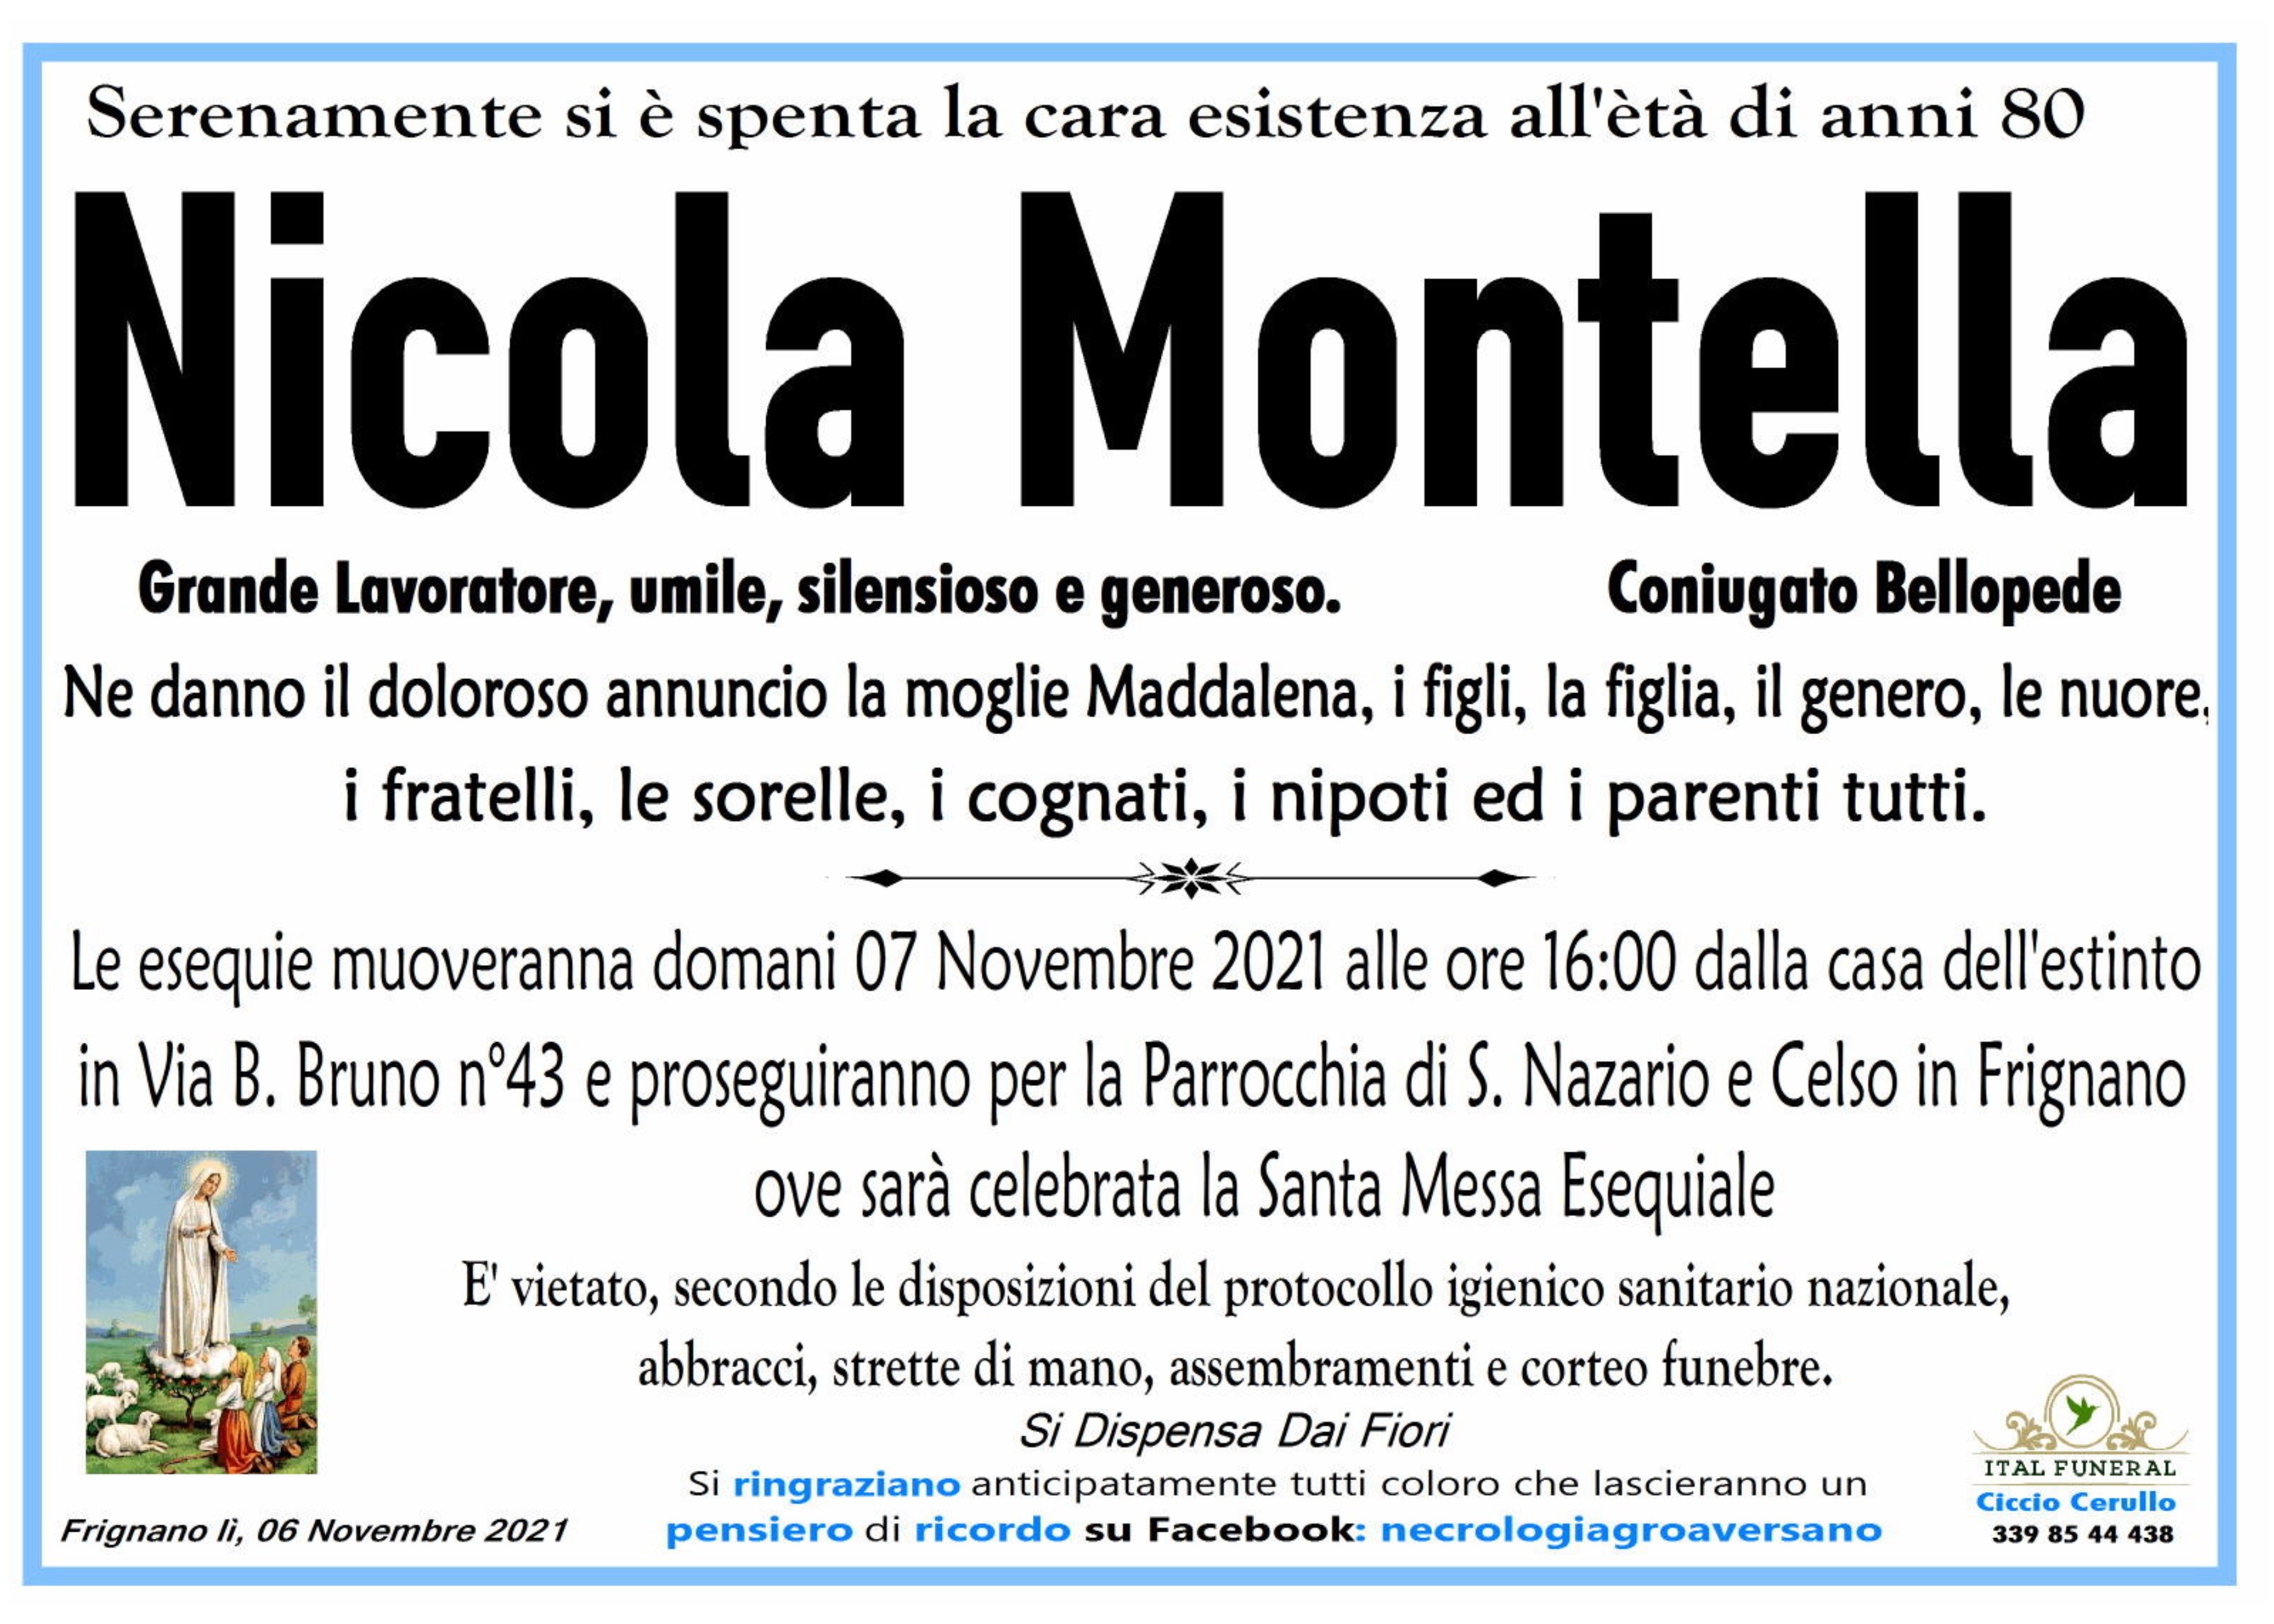 Nicola Montella